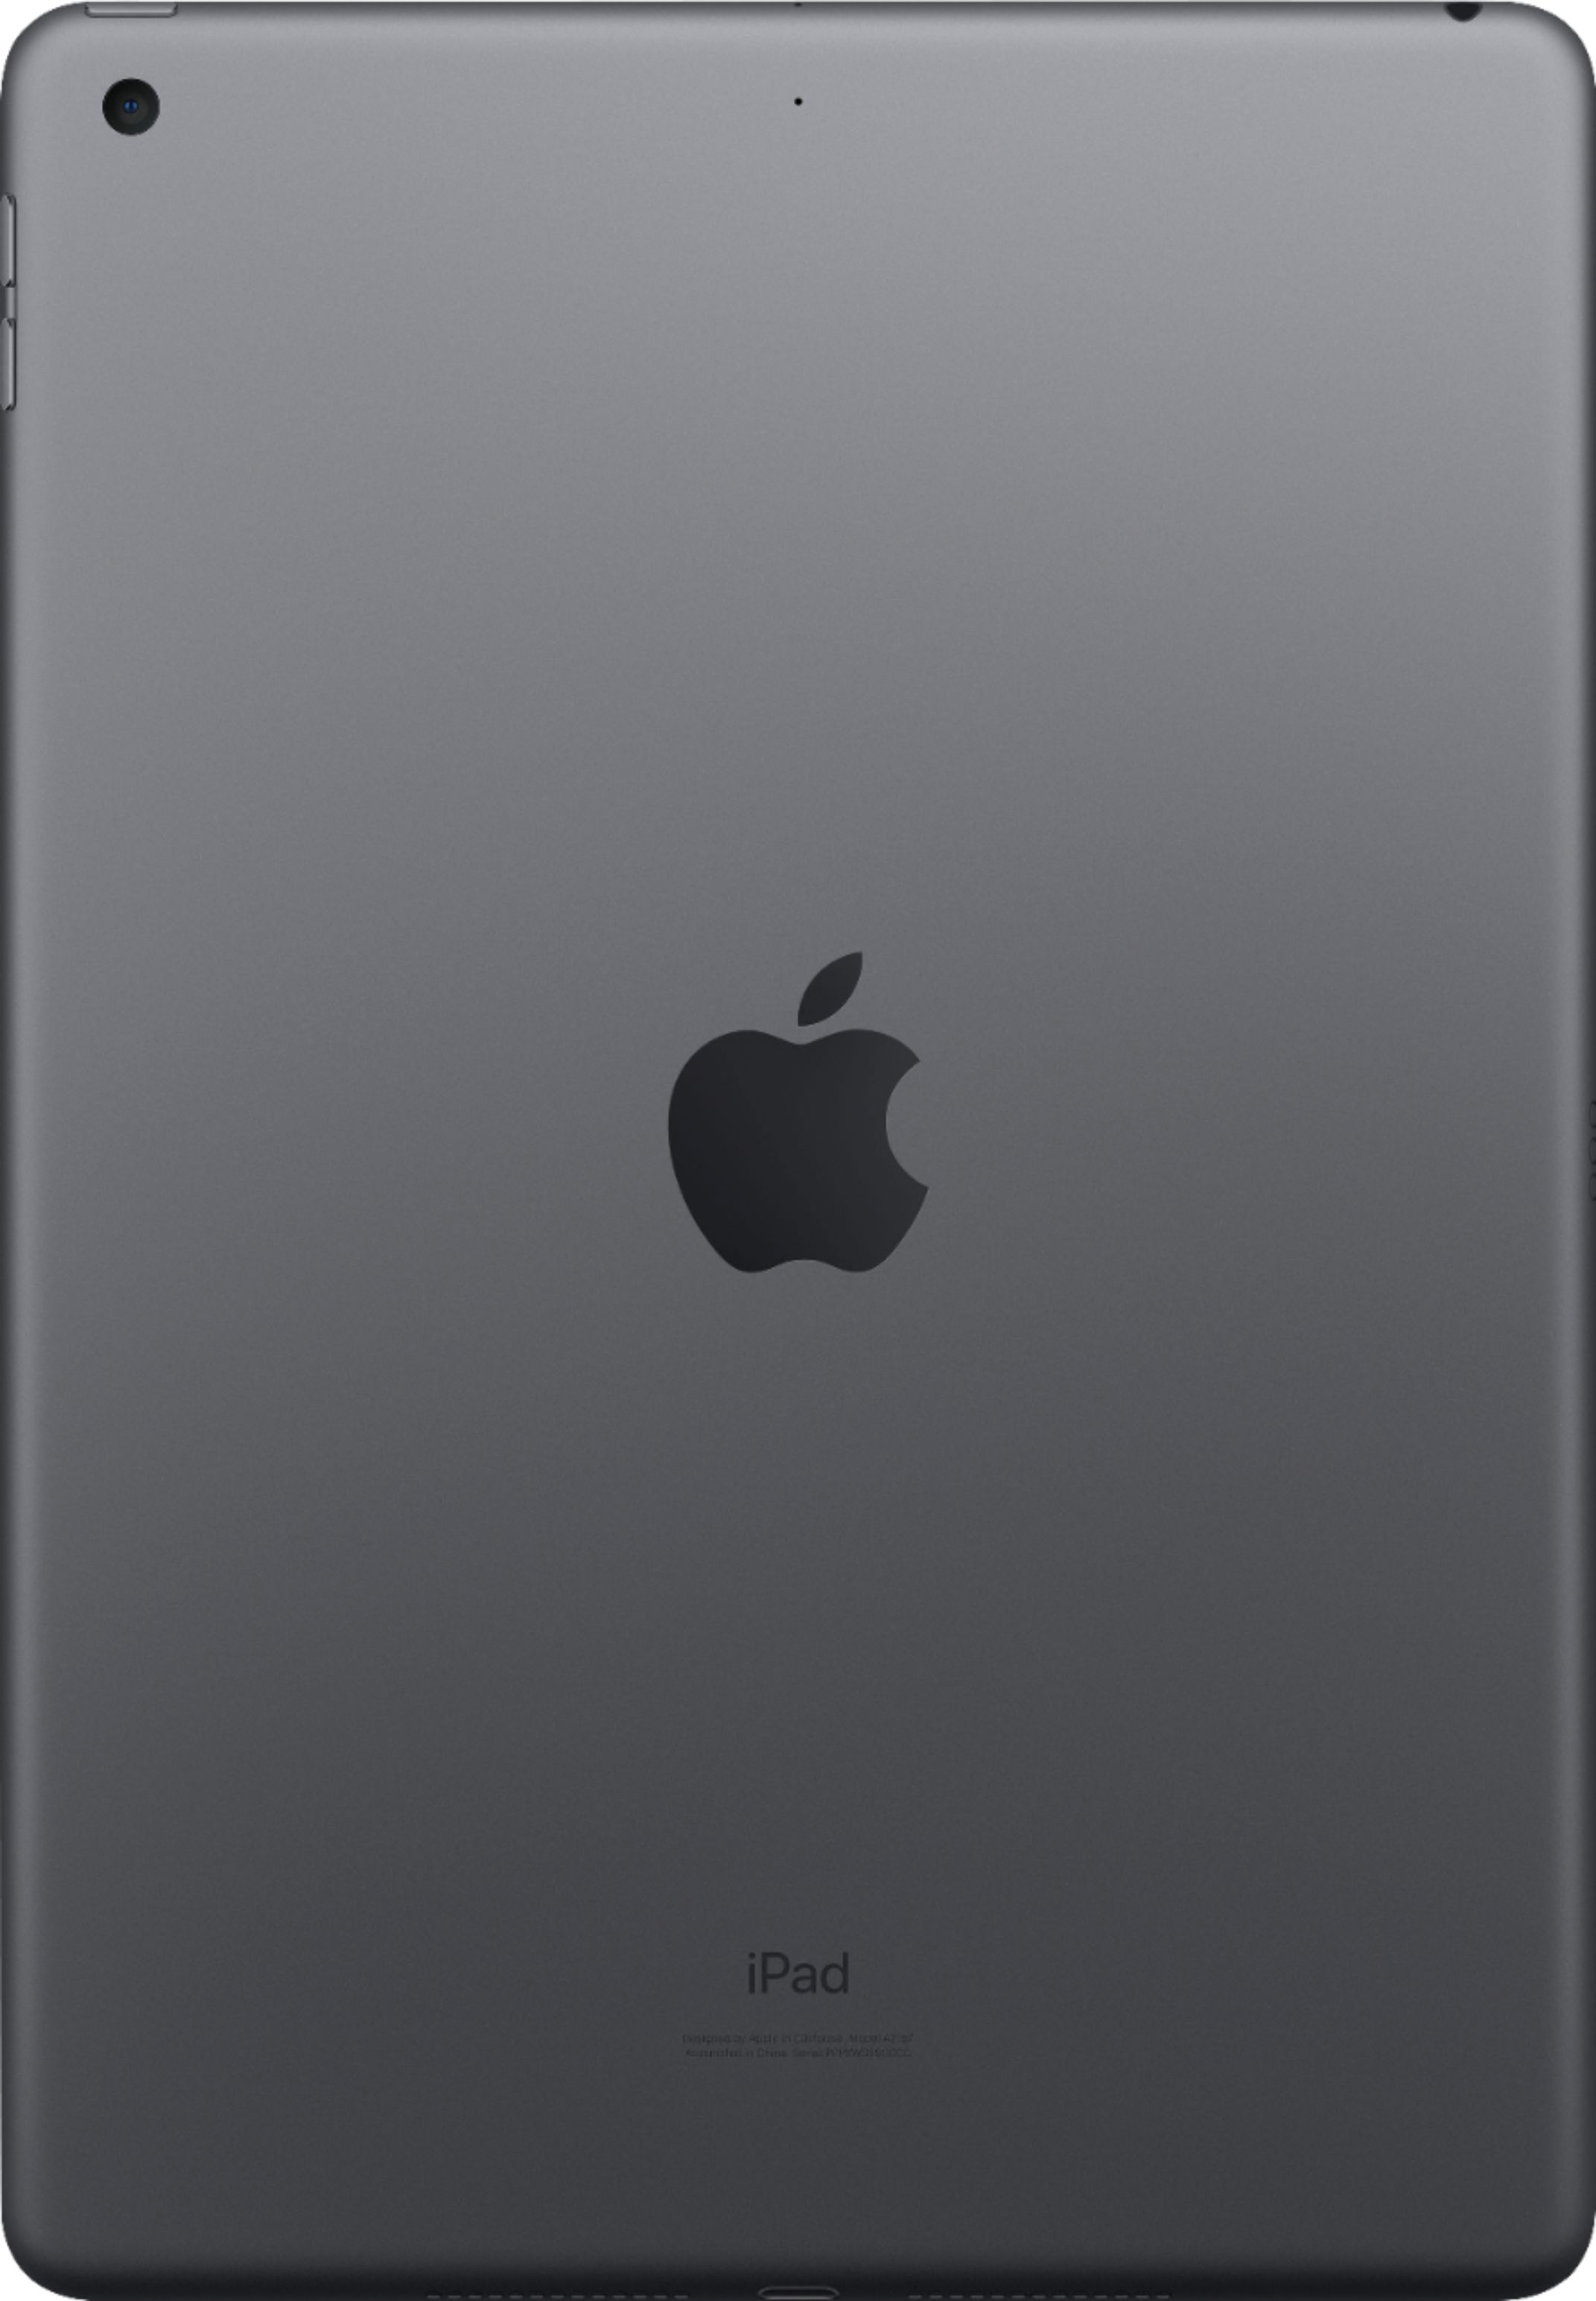 Apple iPad 7th Gen 128 GB 10.2 inch with Wi-Fi (Space Grey) Price